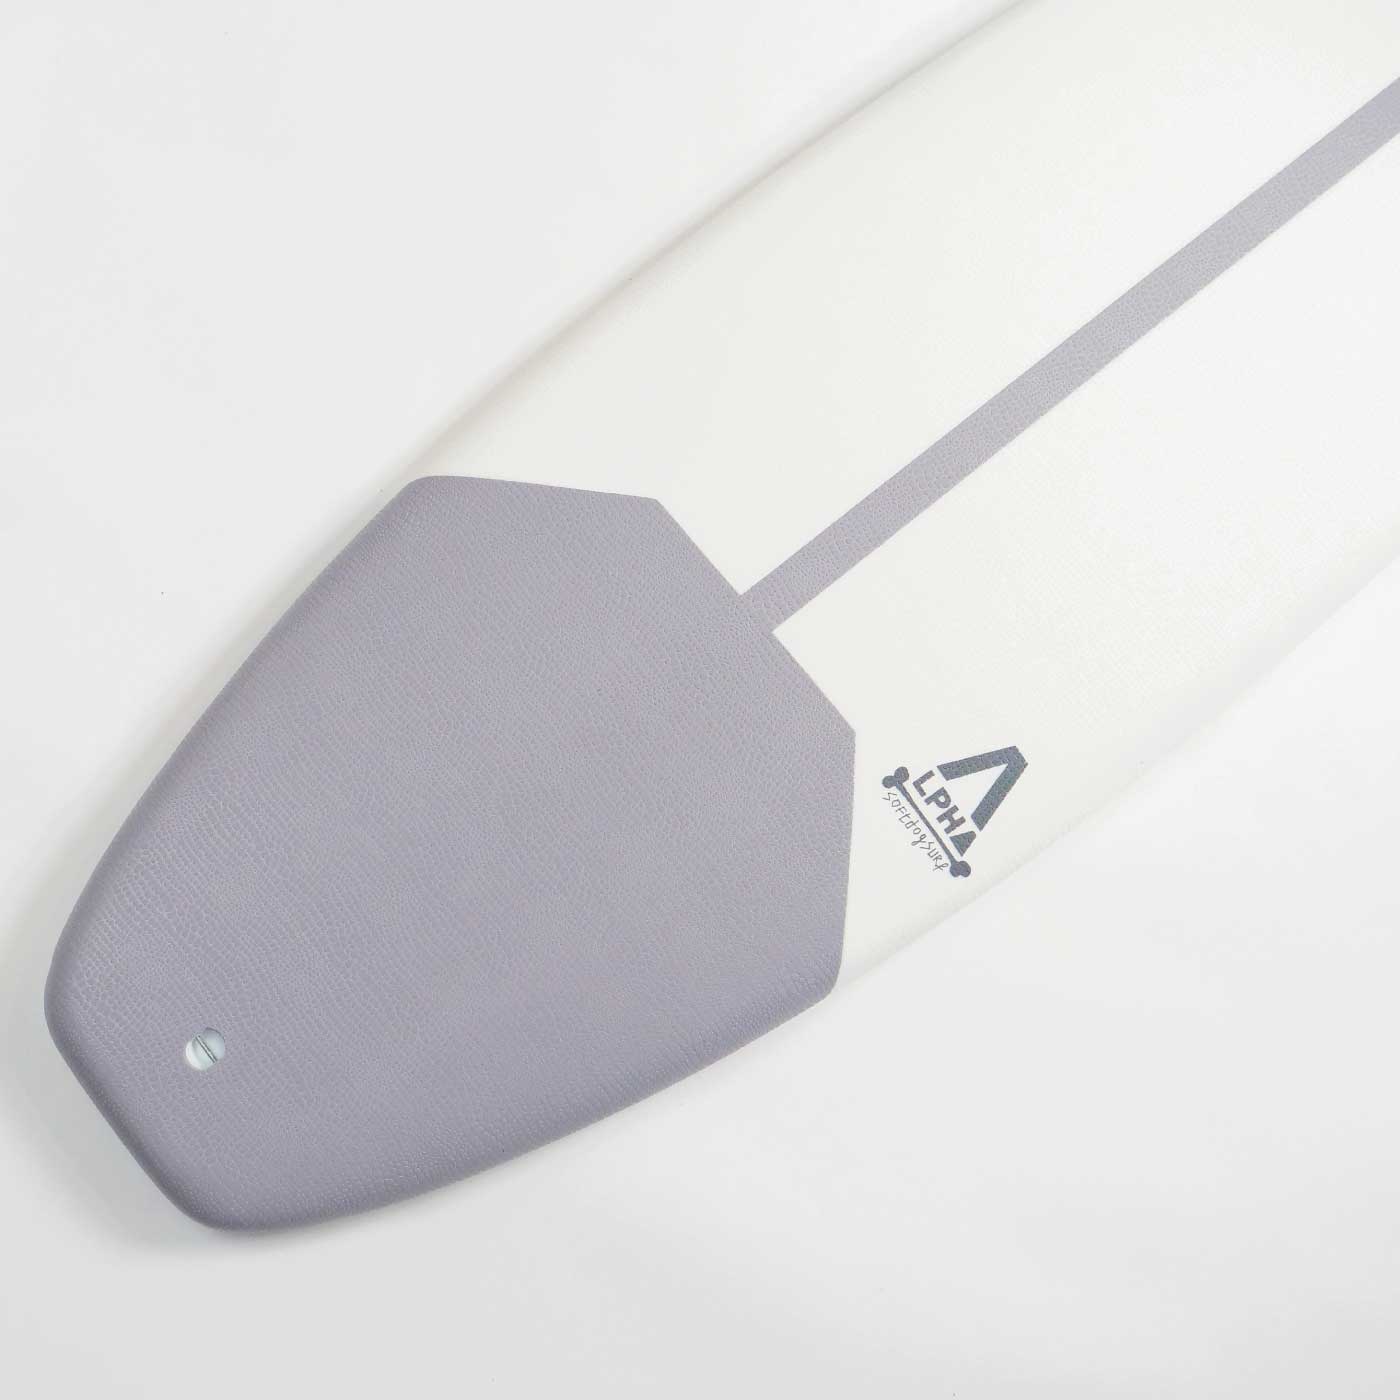 5’2 soft top high-performance surfboard nose